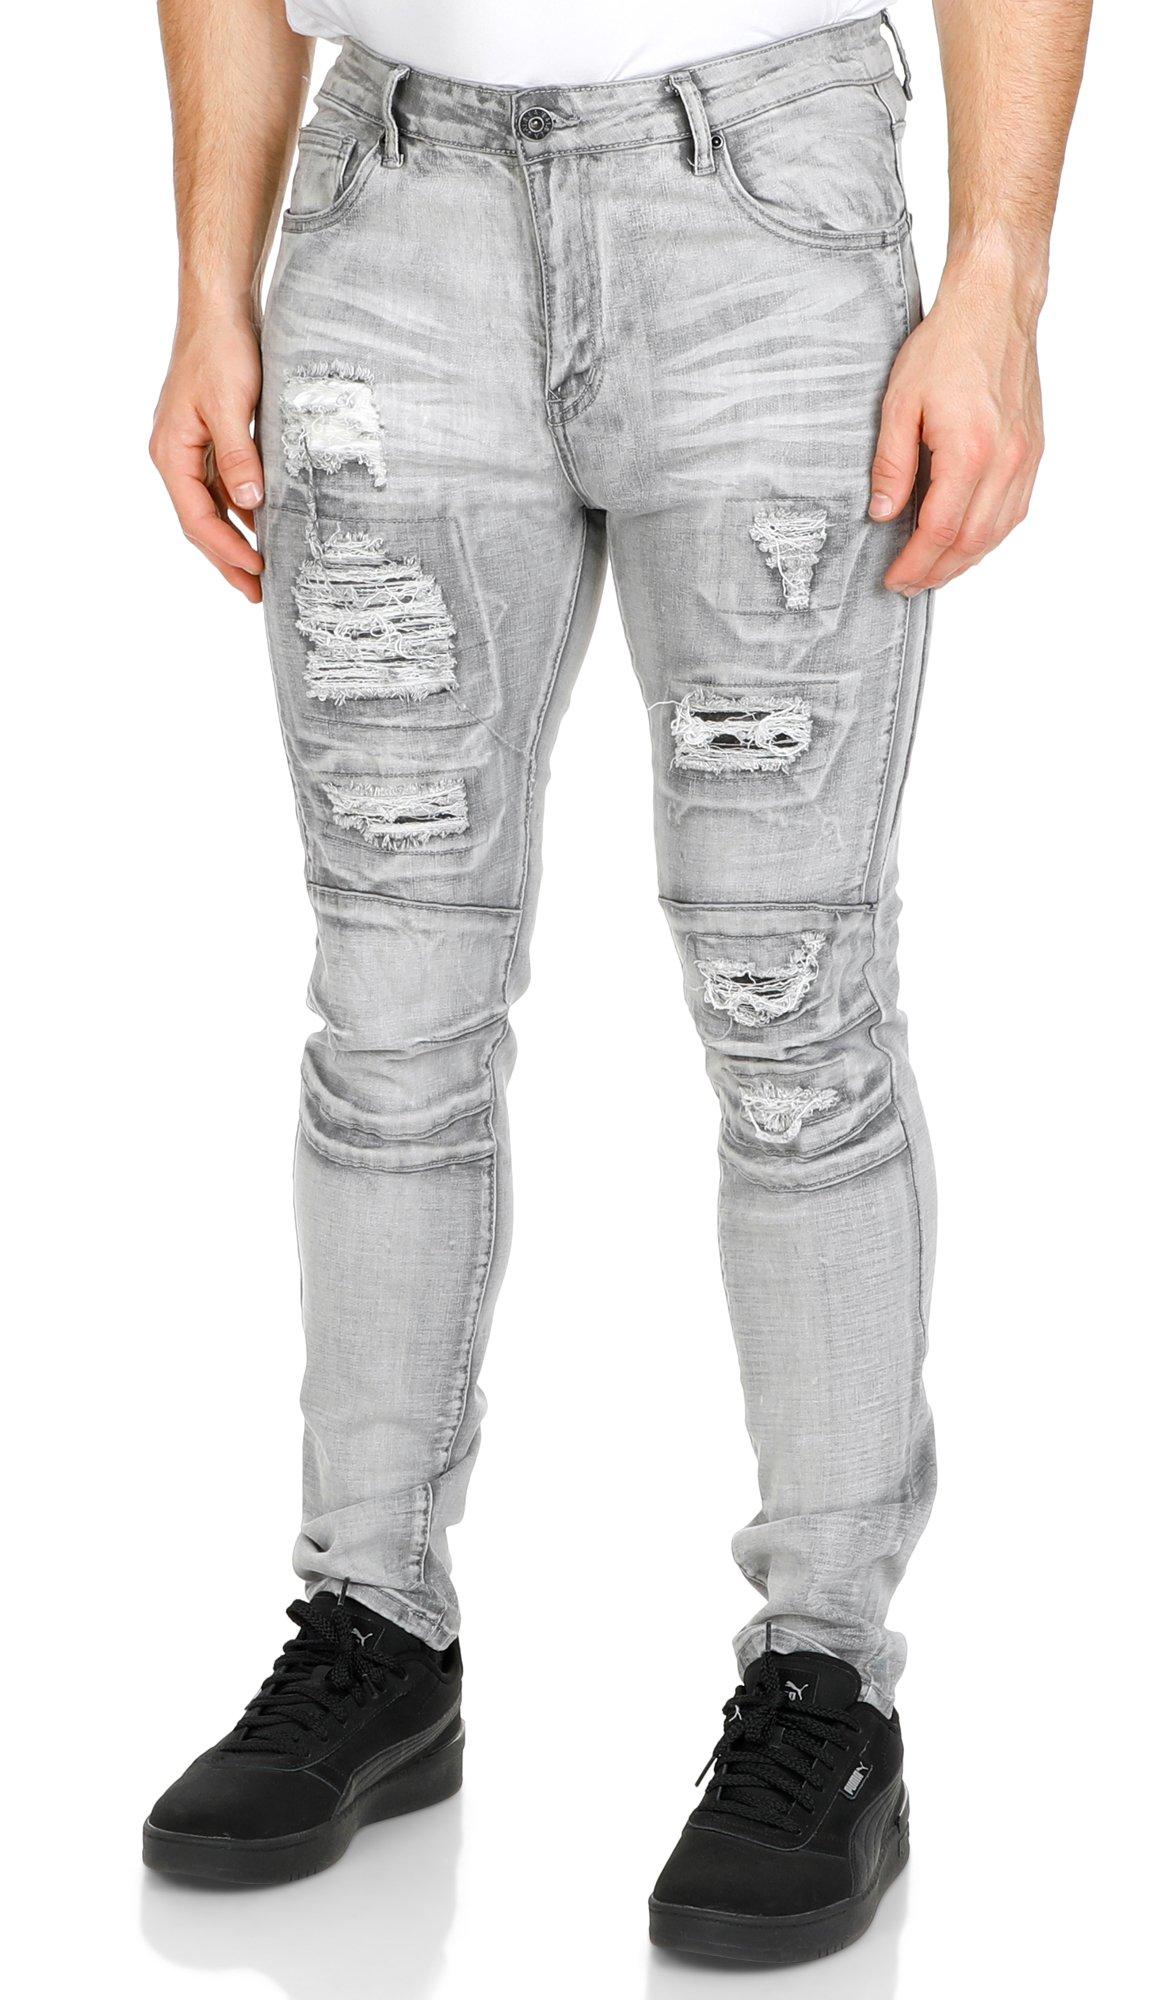 Men's Distressed Jeans